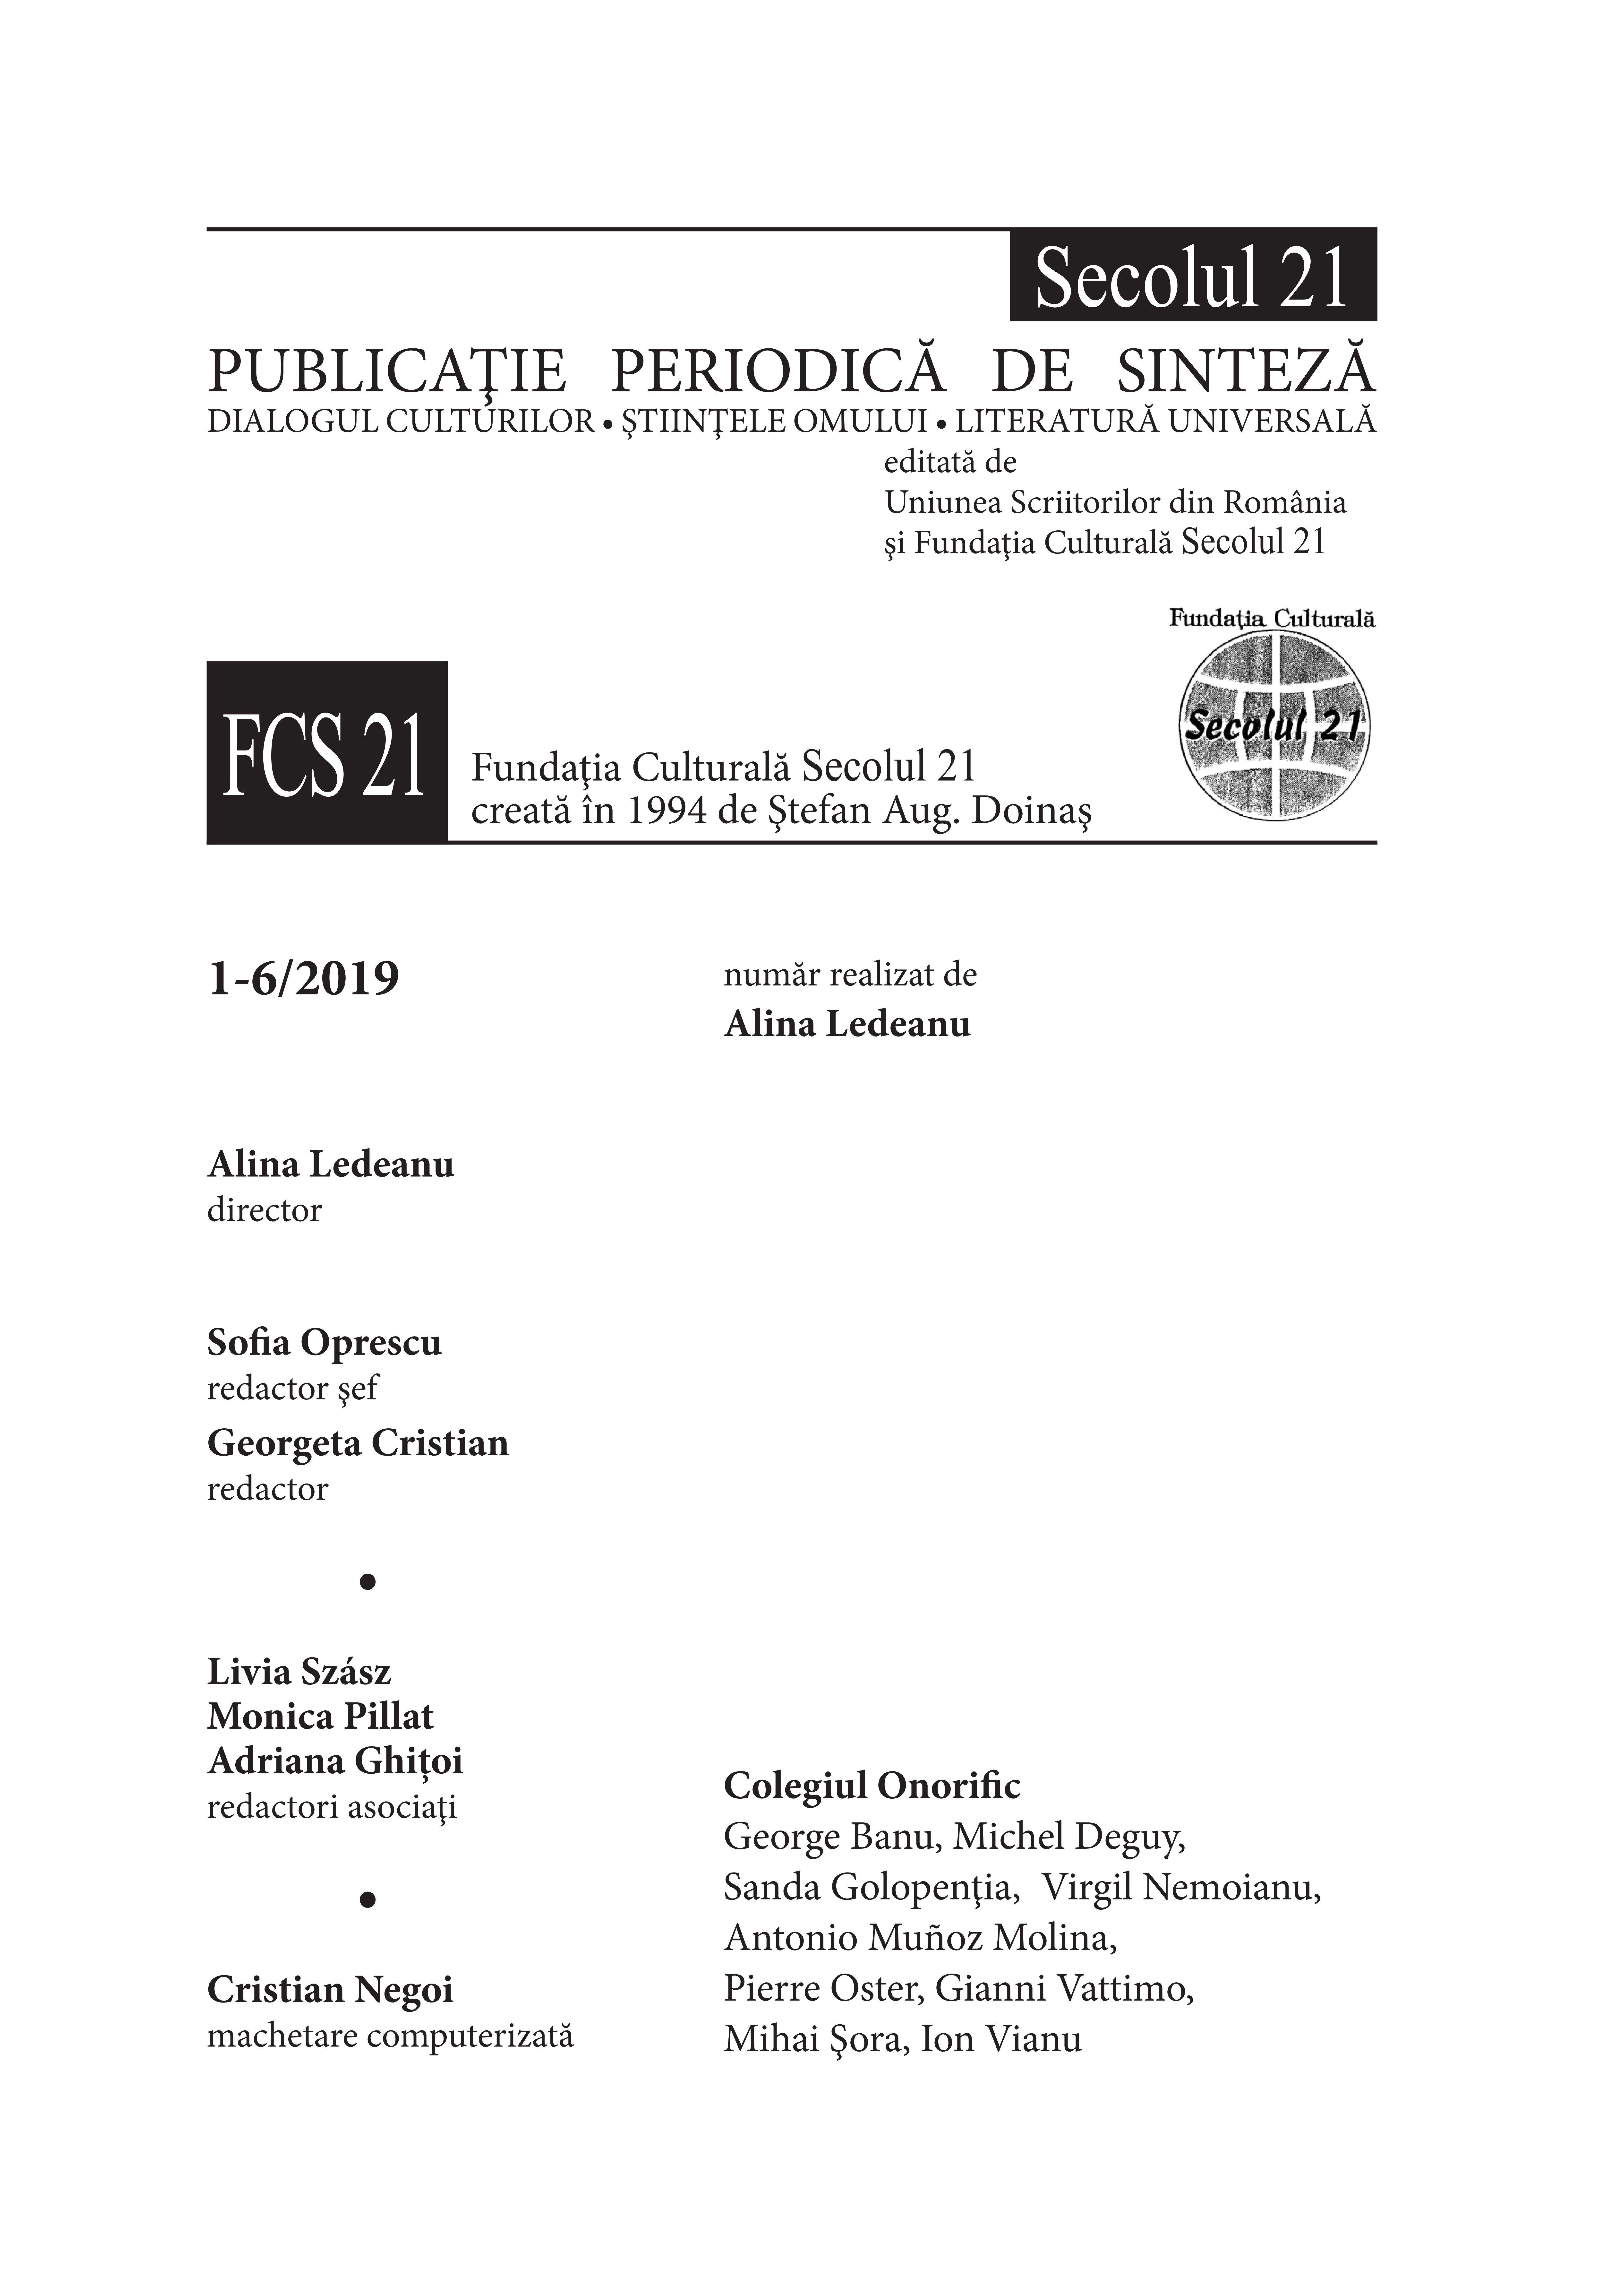 Secolul 21 - Ion Vianu 1-6/2019 caseta redactionala